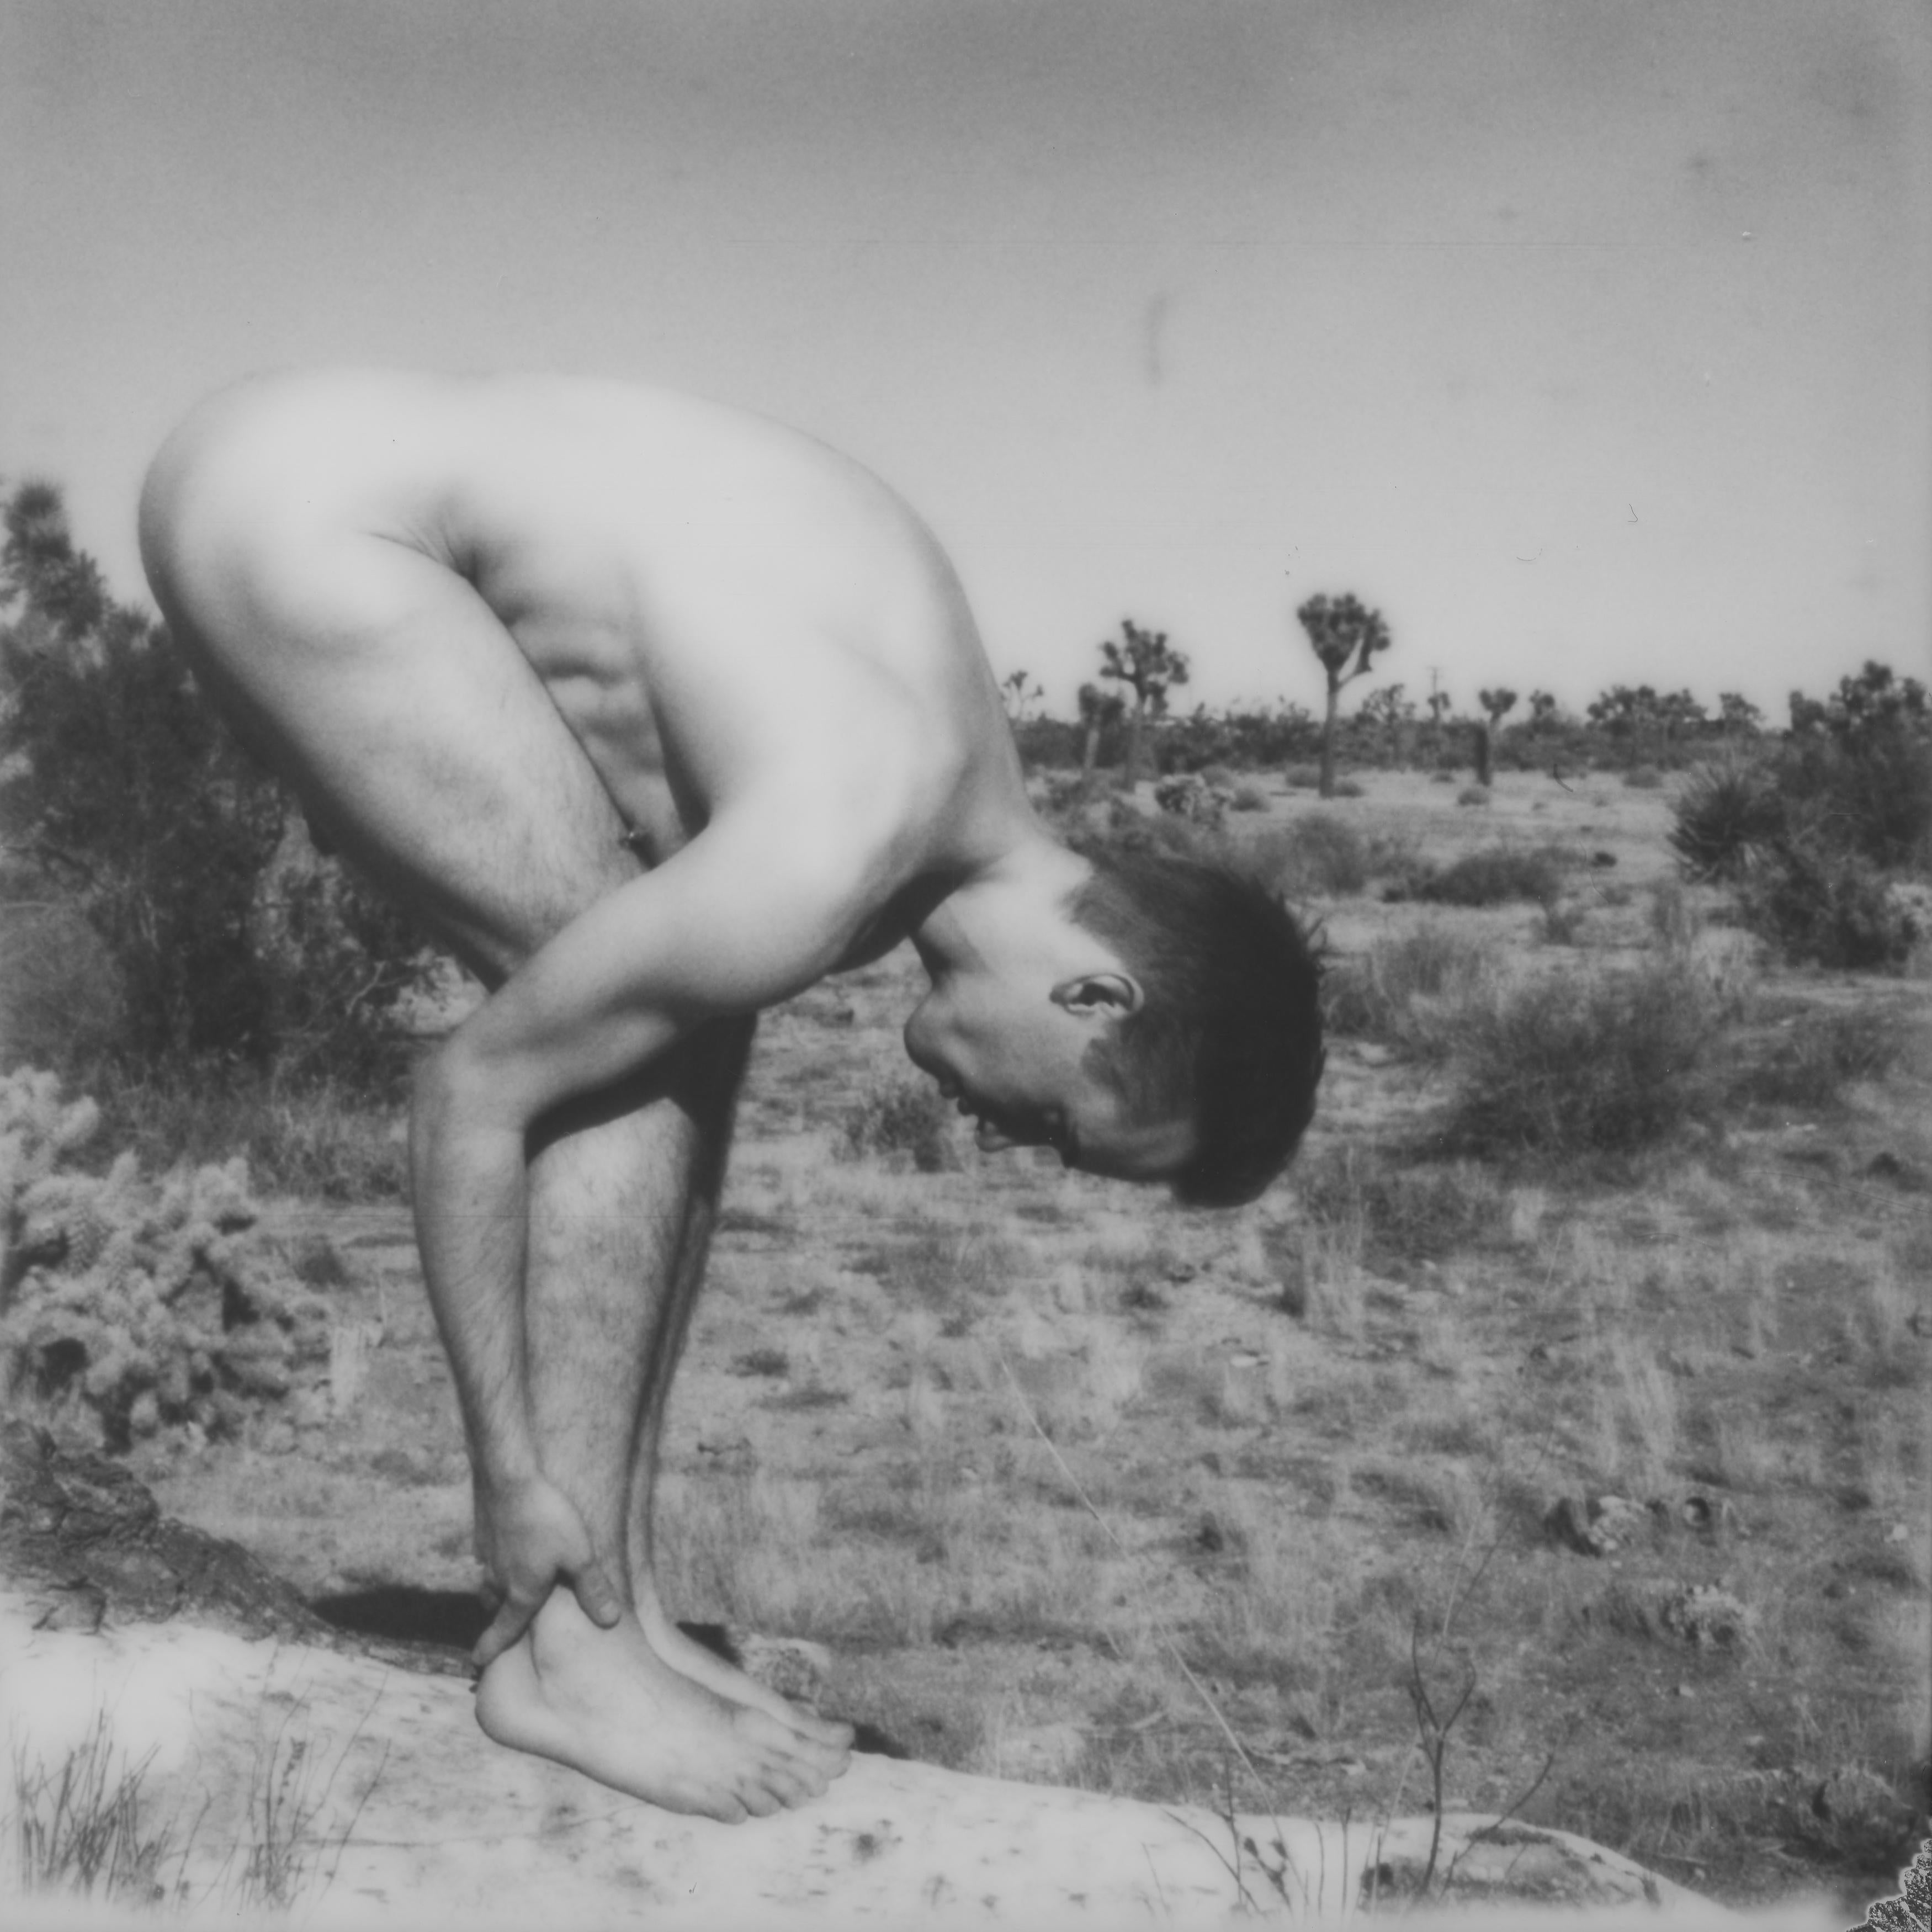 Black and White Photograph Kirsten Thys van den Audenaerde - Take a Stand - Contemporain, Polaroid, Nu, 21ème siècle, Joshua Tree